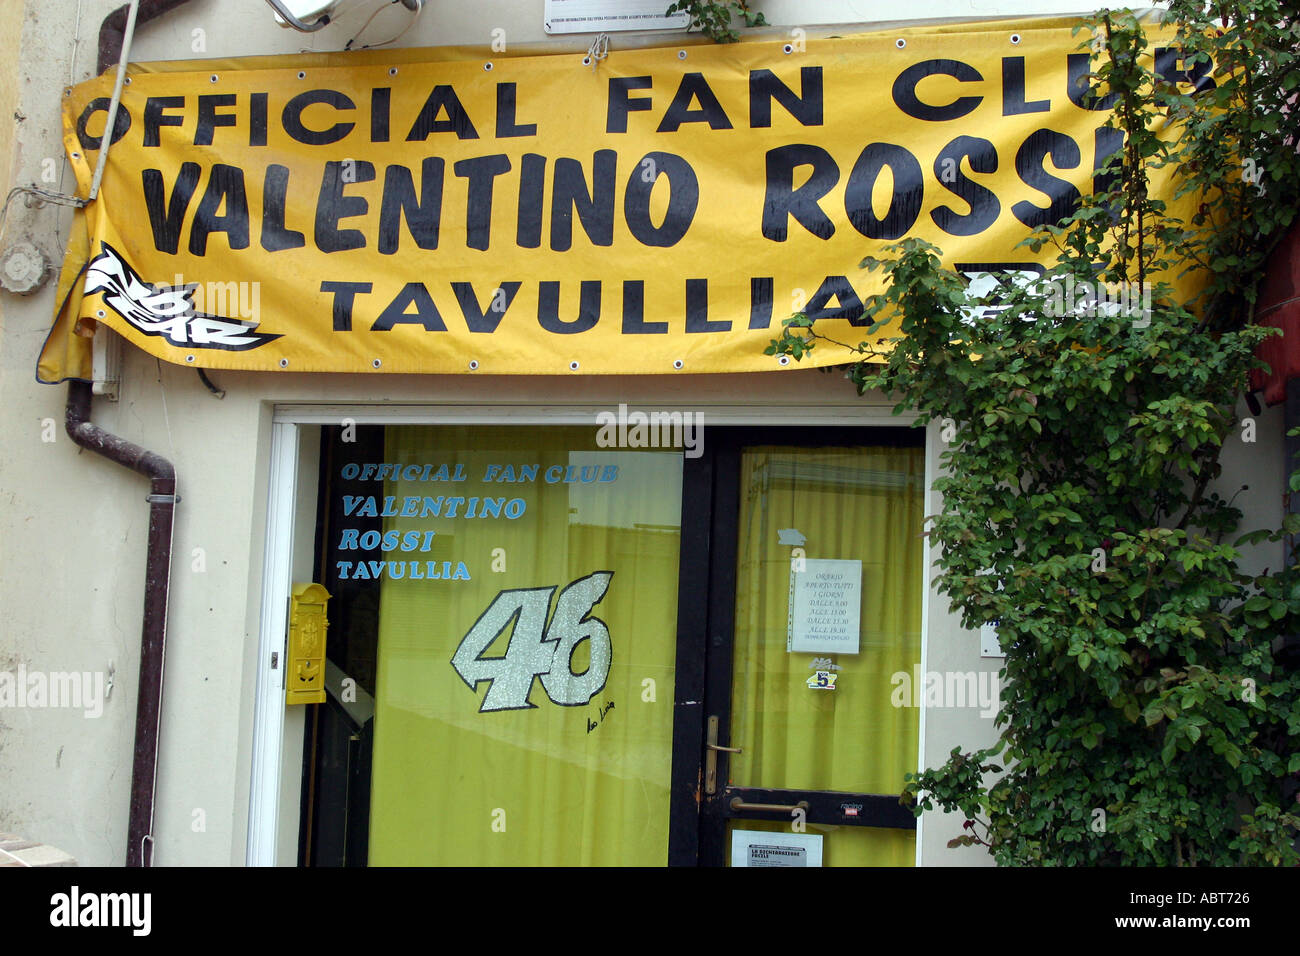 Rød forælder Forblive valentino rossi fan club in tavullia italy Stock Photo - Alamy